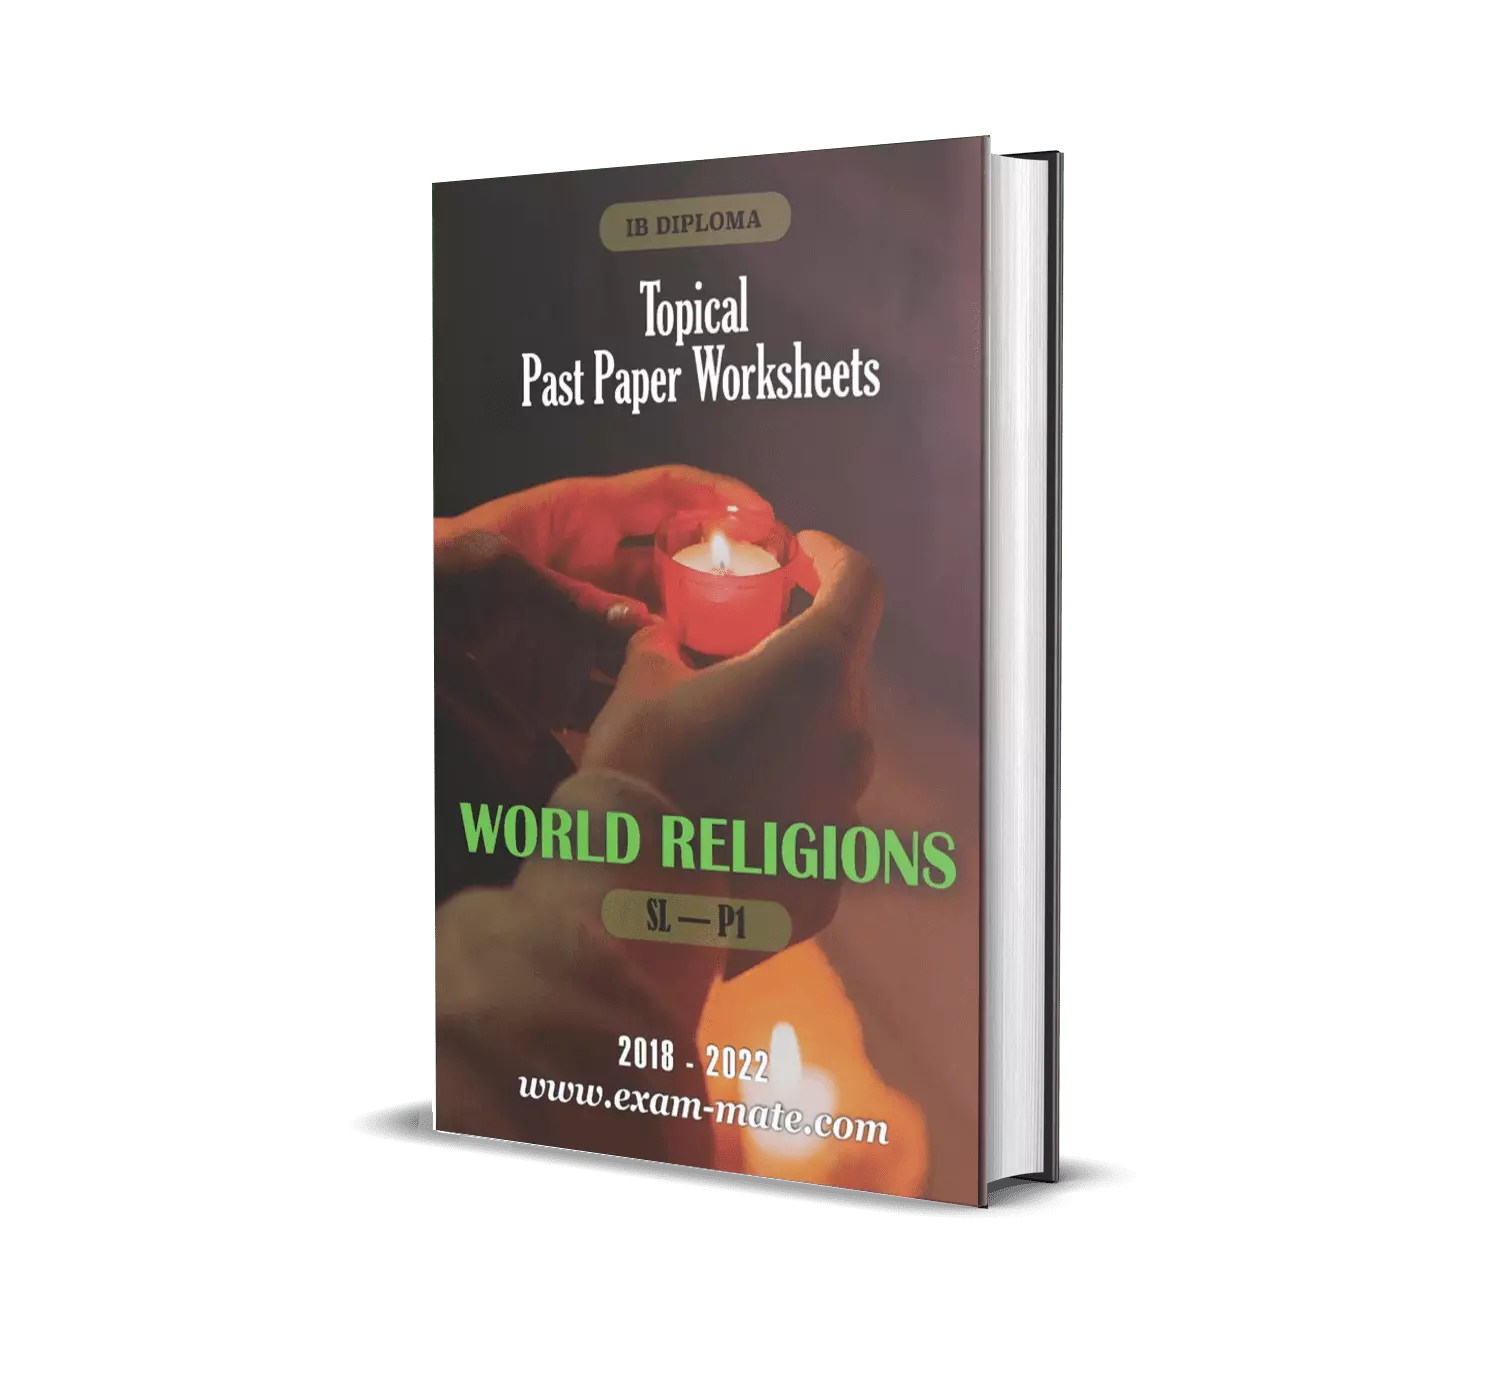 WORLD RELIGIONS SL P1